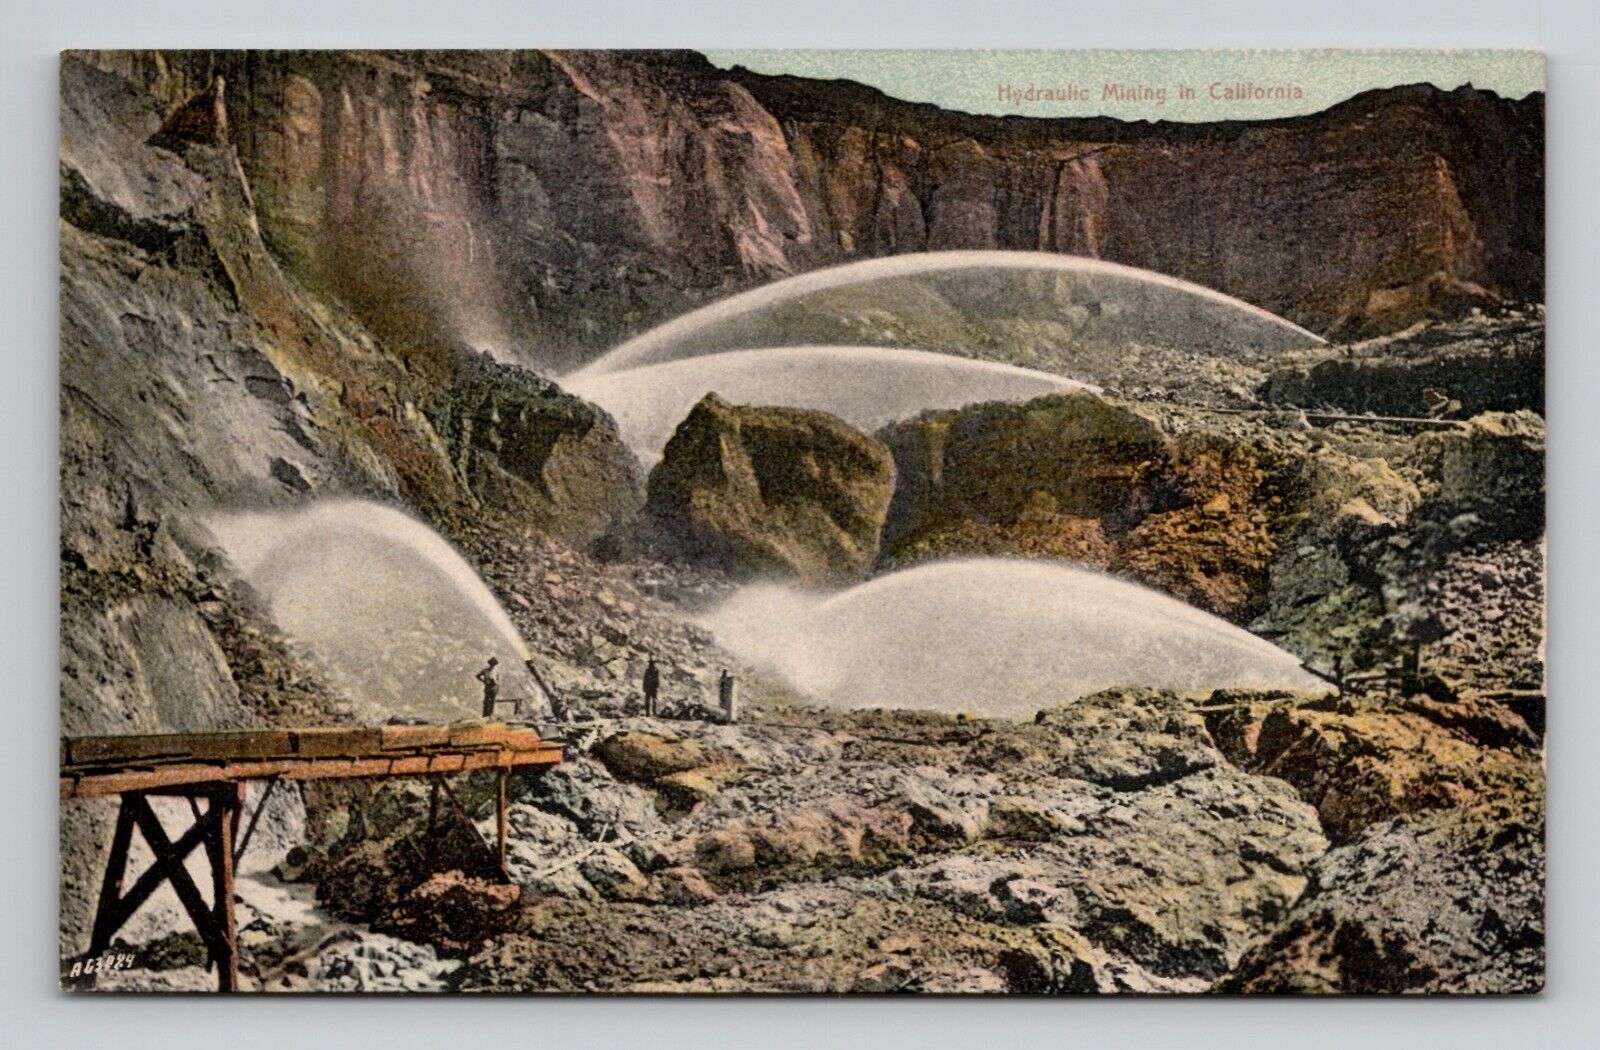 Postcard c1917 CA Hydraulic Mining in California